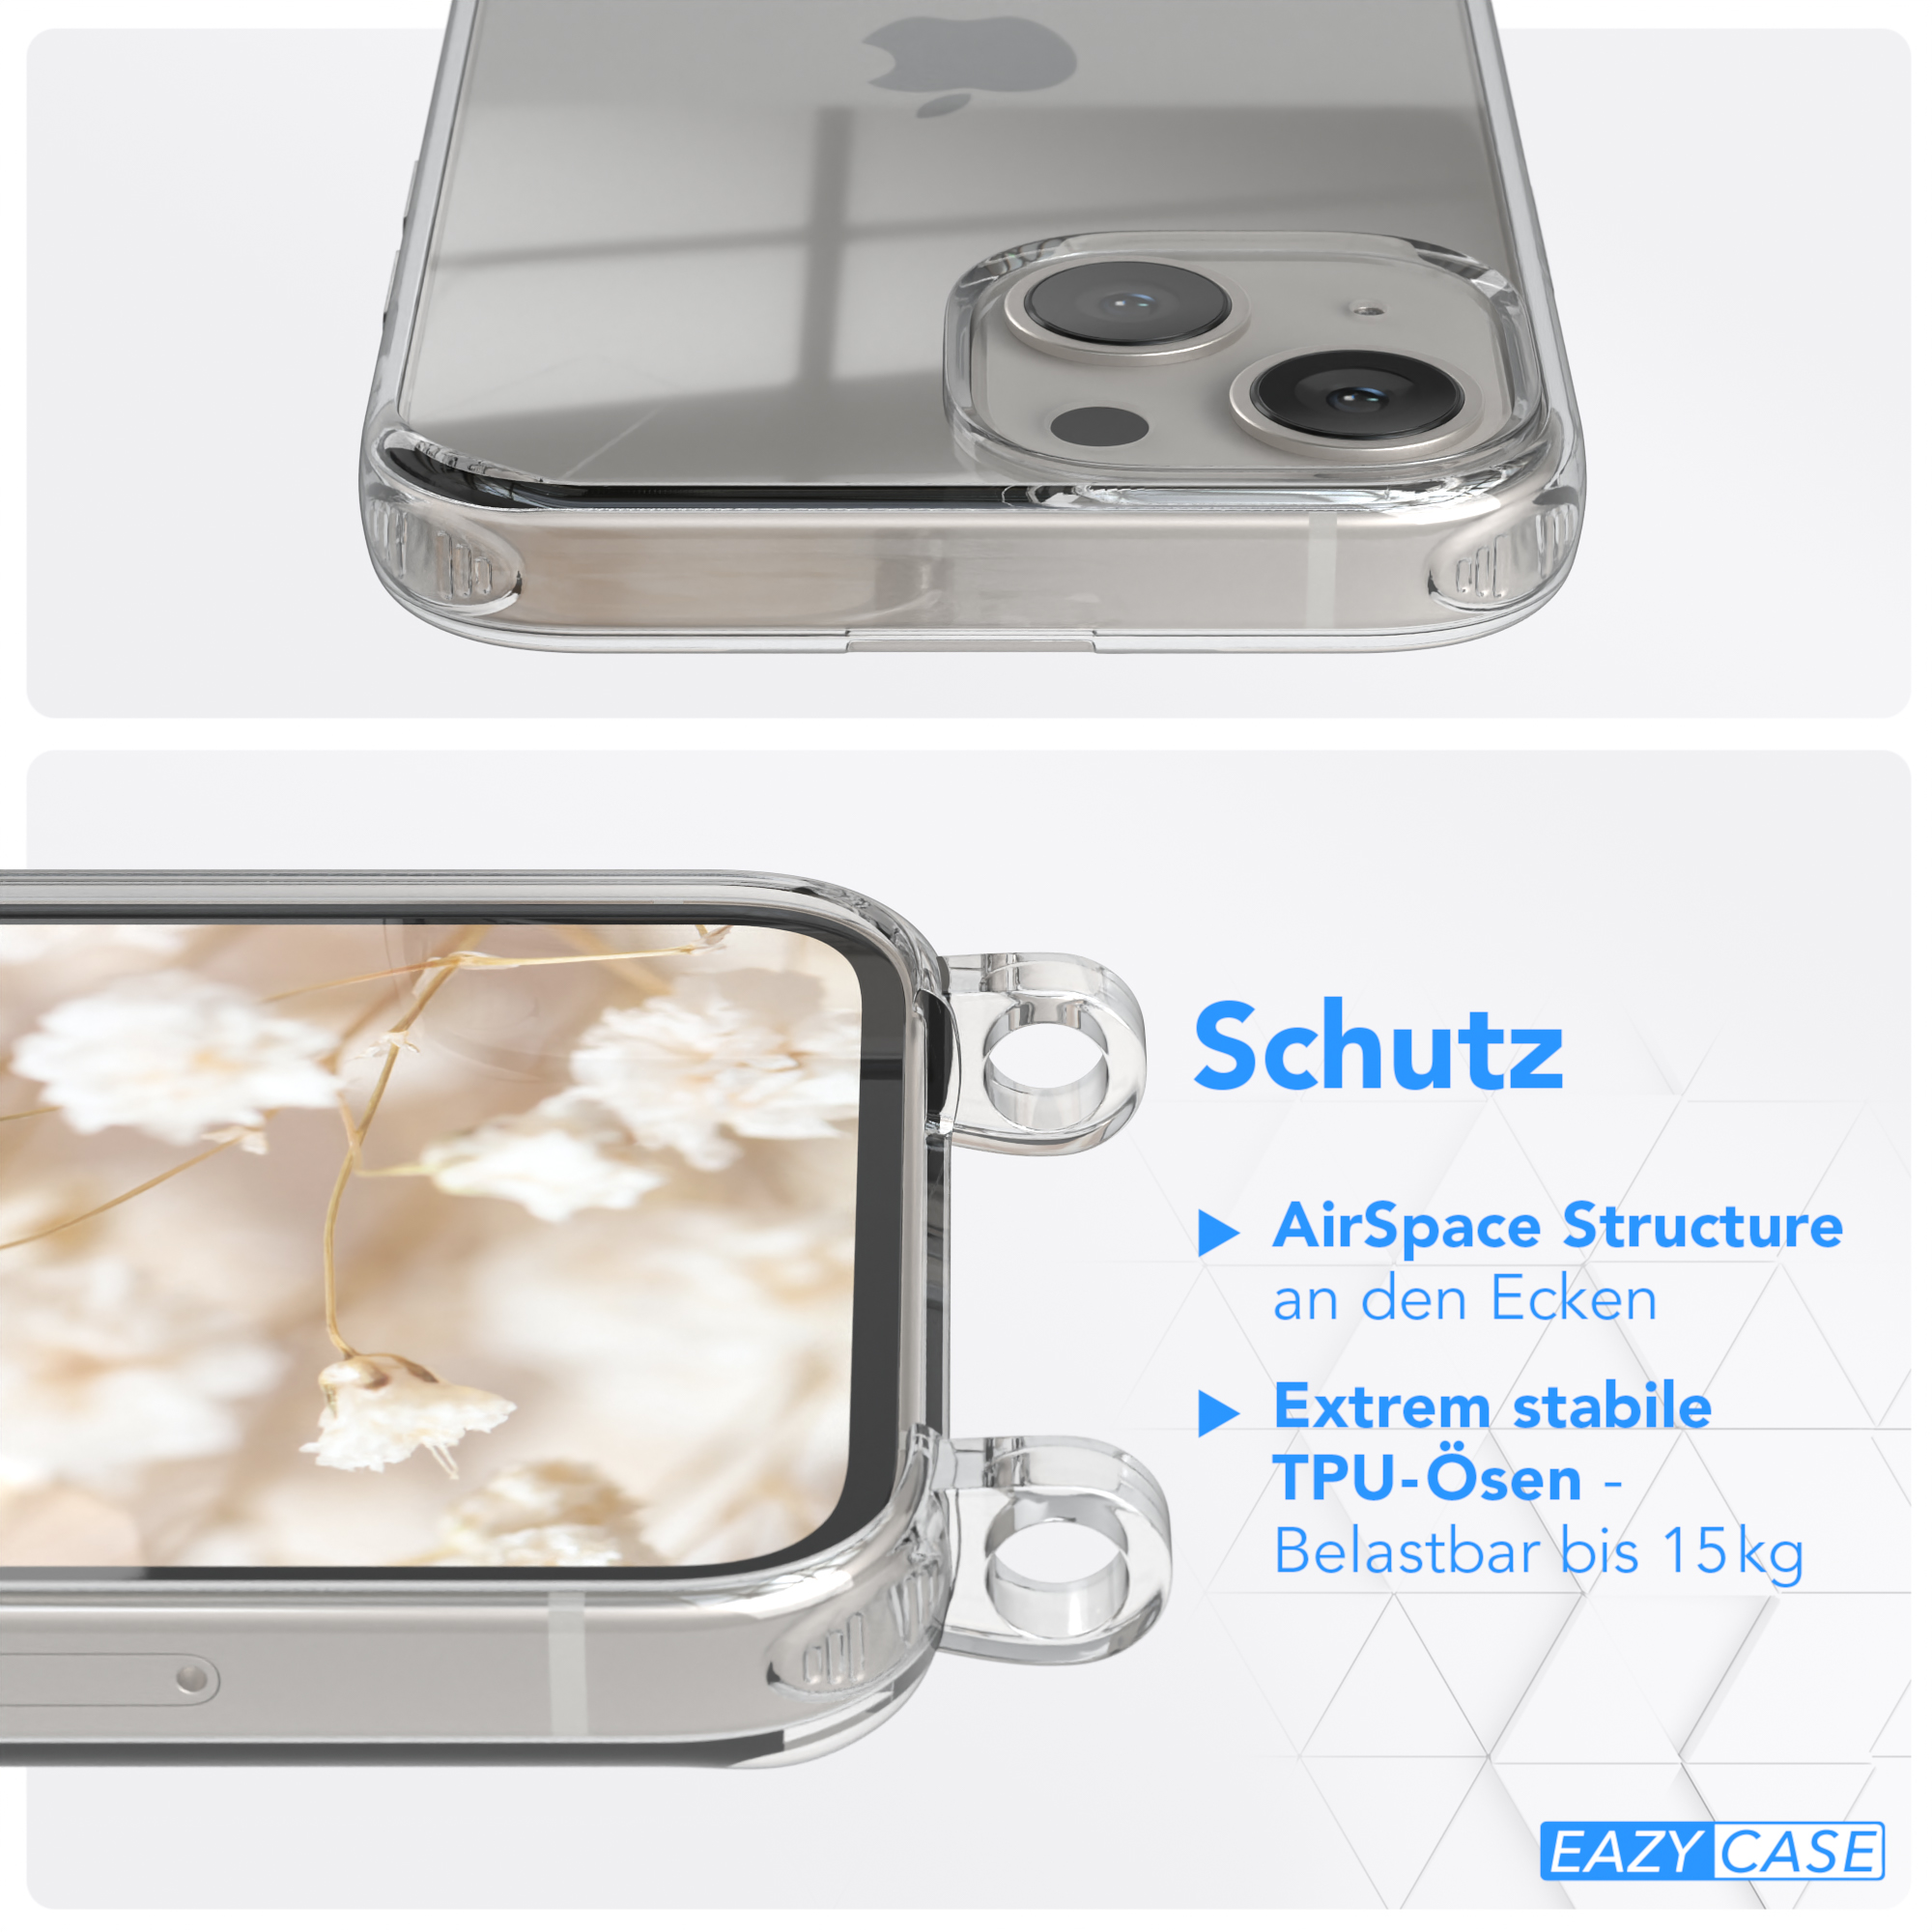 EAZY CASE Transparente 13 Mini, iPhone mit Hellblau Apple, / Rot Handyhülle Style, Boho Kordel Umhängetasche